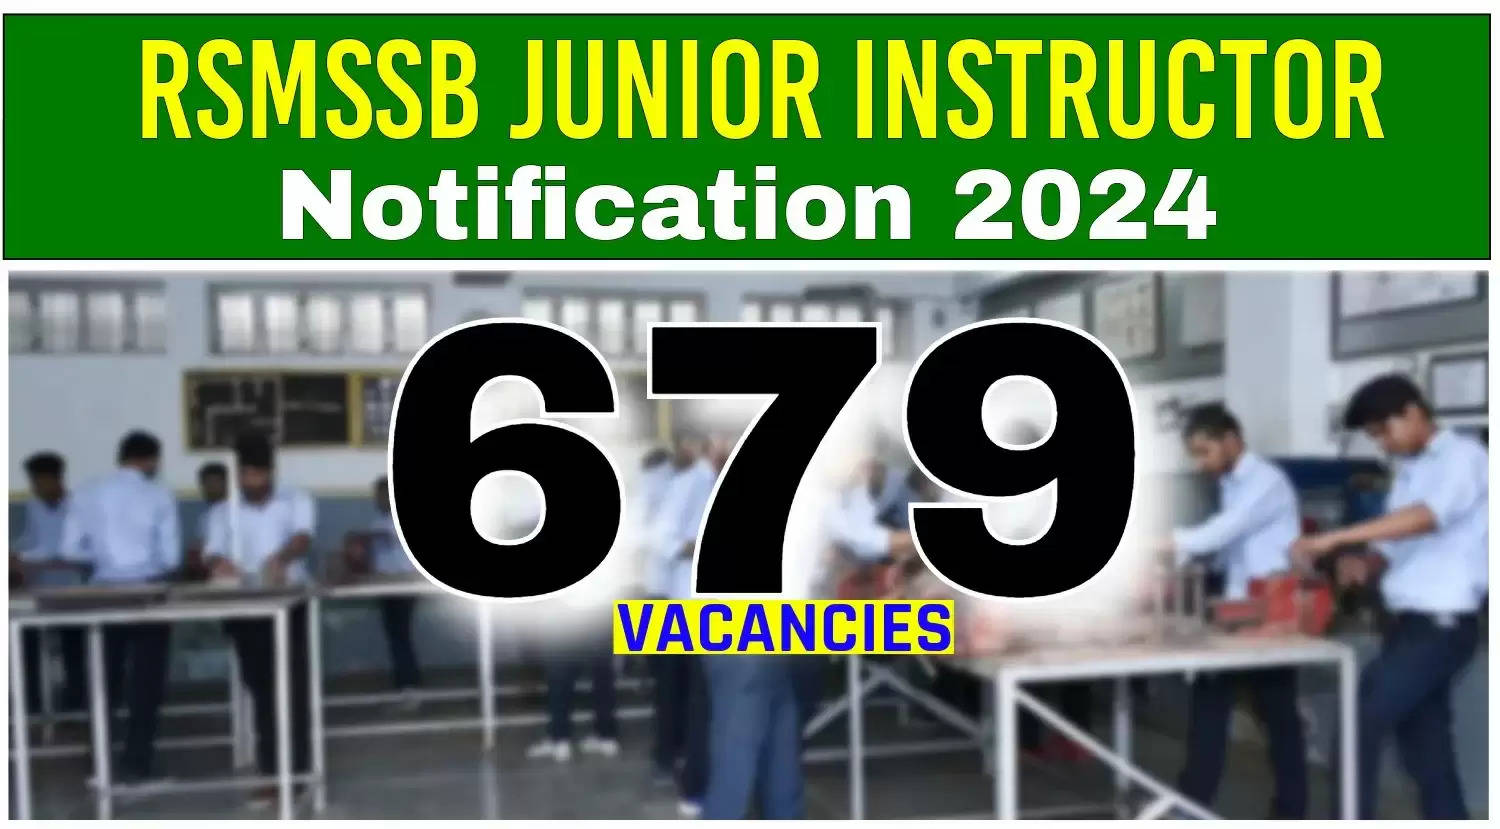 RSMSSB Announces Junior Instructor Recruitment 2024: Apply Online for 679 Vacancies